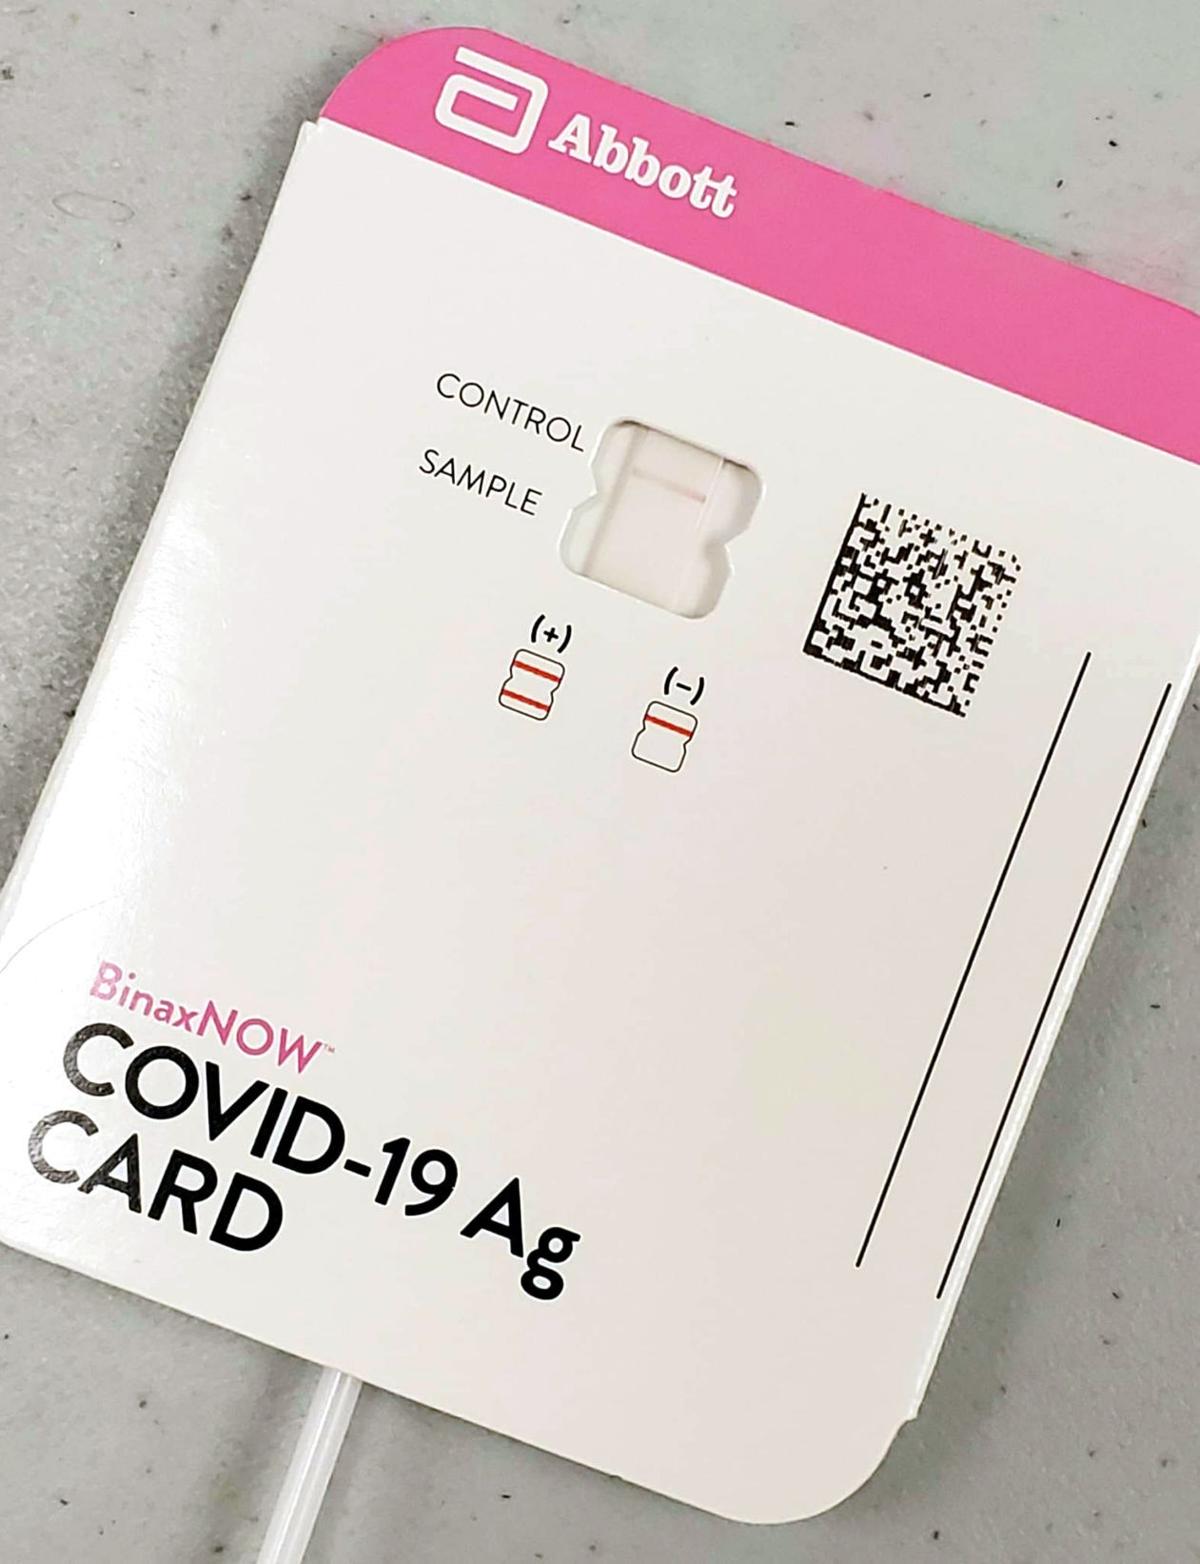 COVID-19 Rapid Test